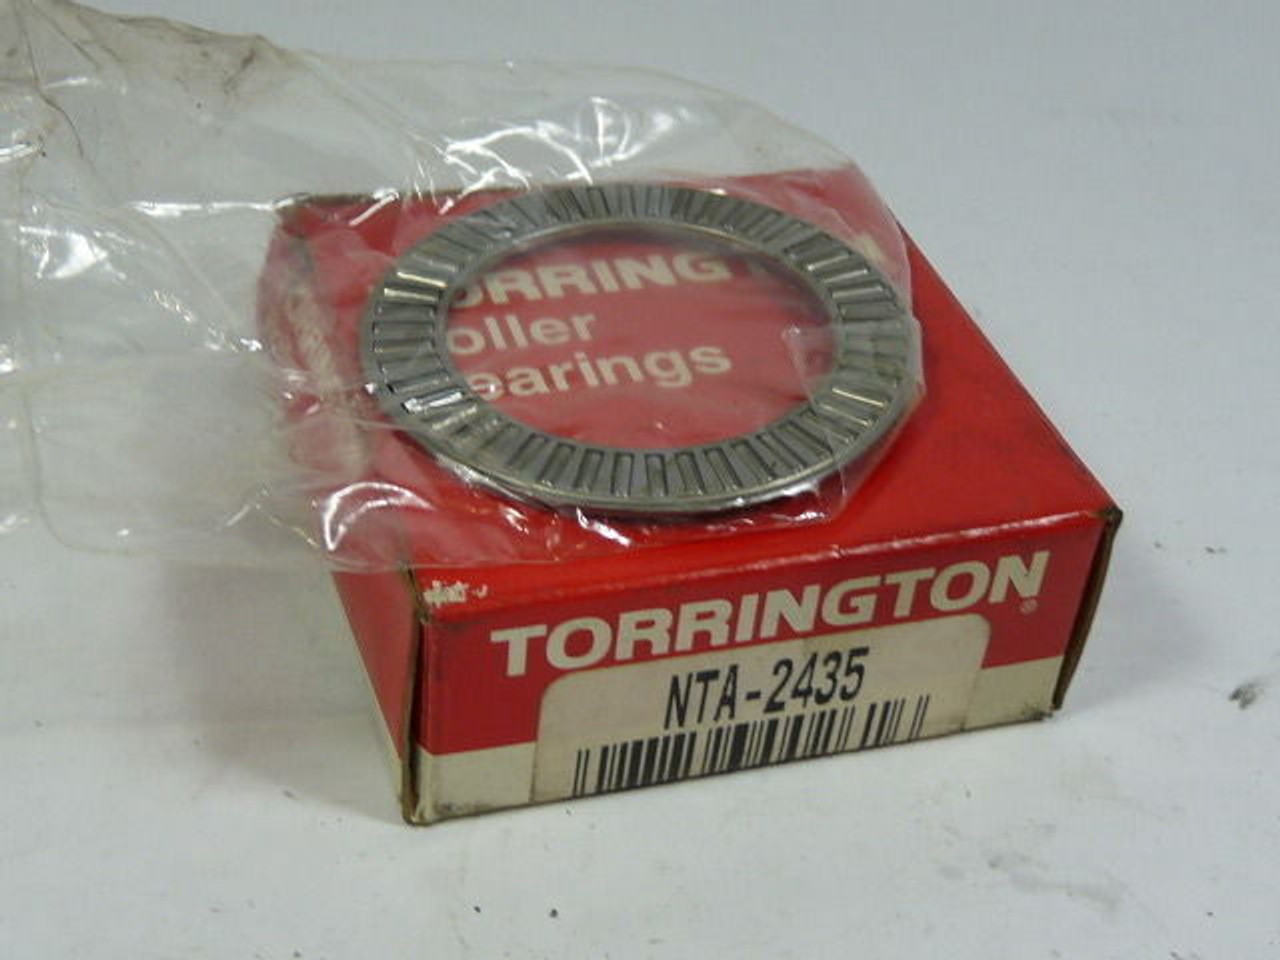 Torrington NTA-2435 Thrust Bearing ! NEW !